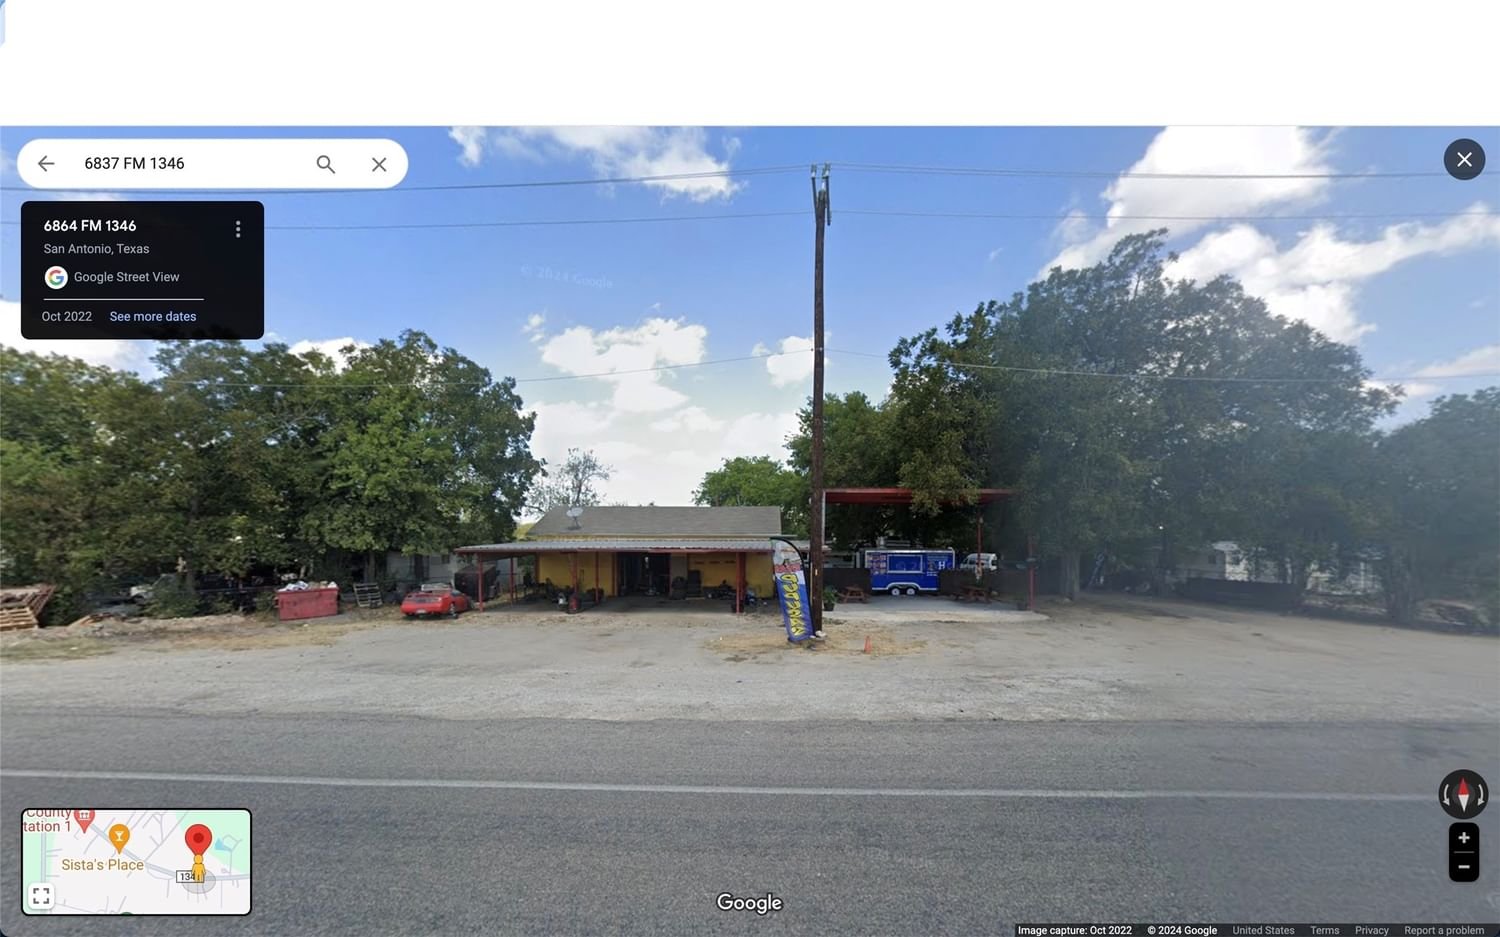 Real estate property located at 6837 FM 1346, Bexar, Gardendale Acreage Cnty Bl 587, San Antonio, TX, US